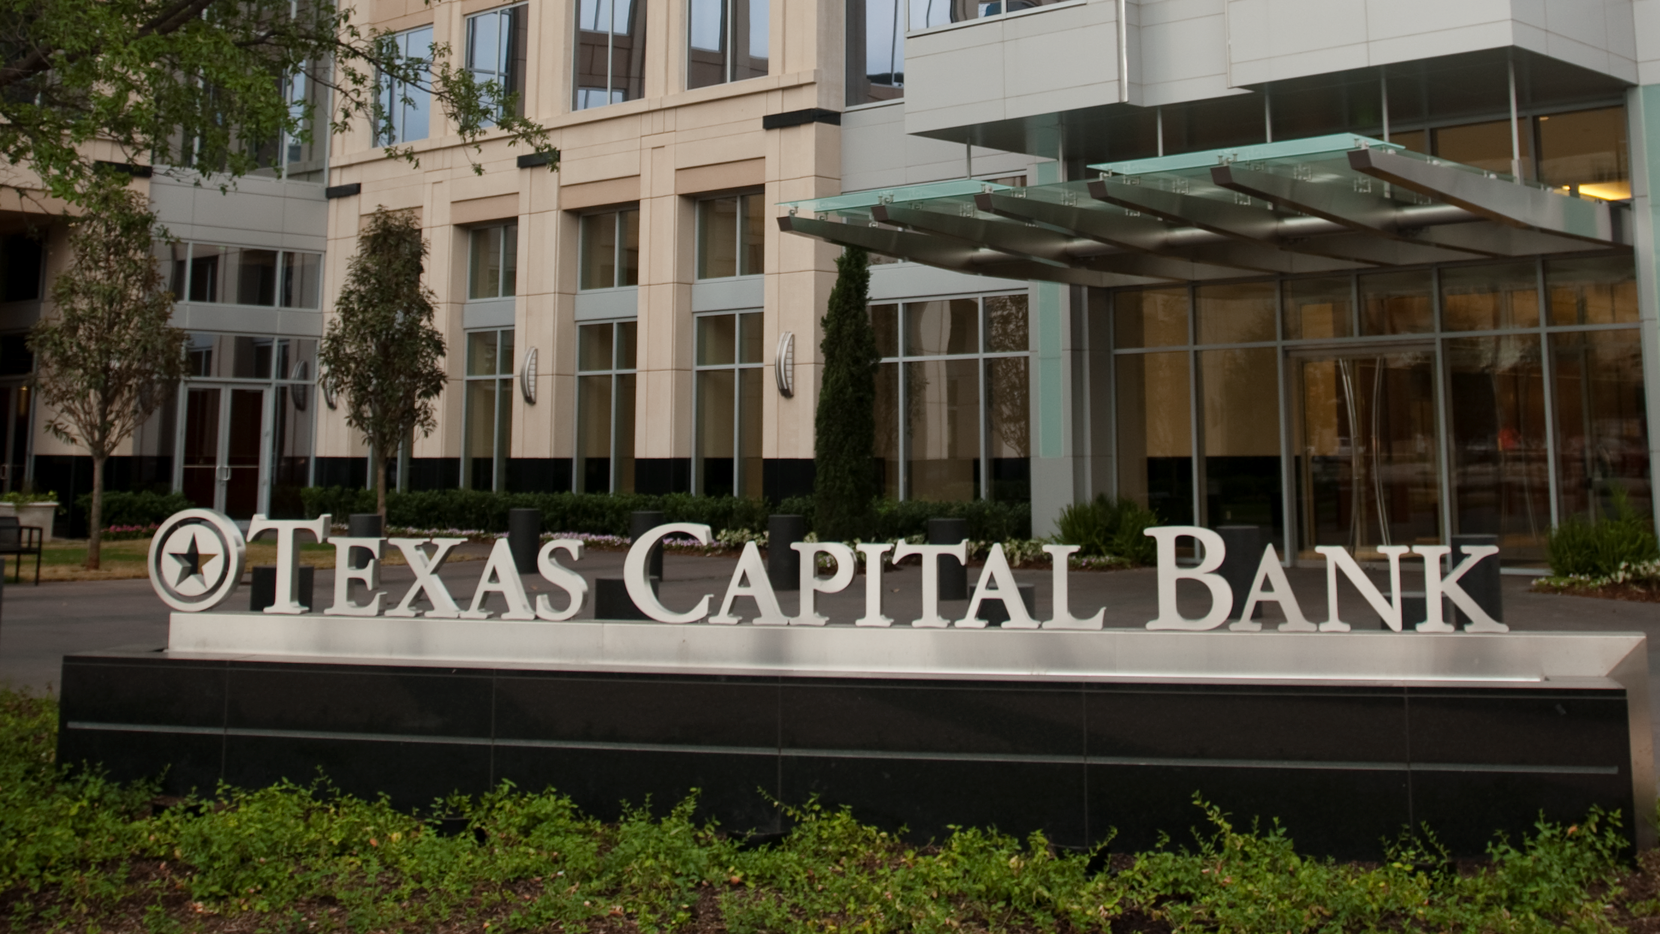 Exterior of Texas Capital Bank.